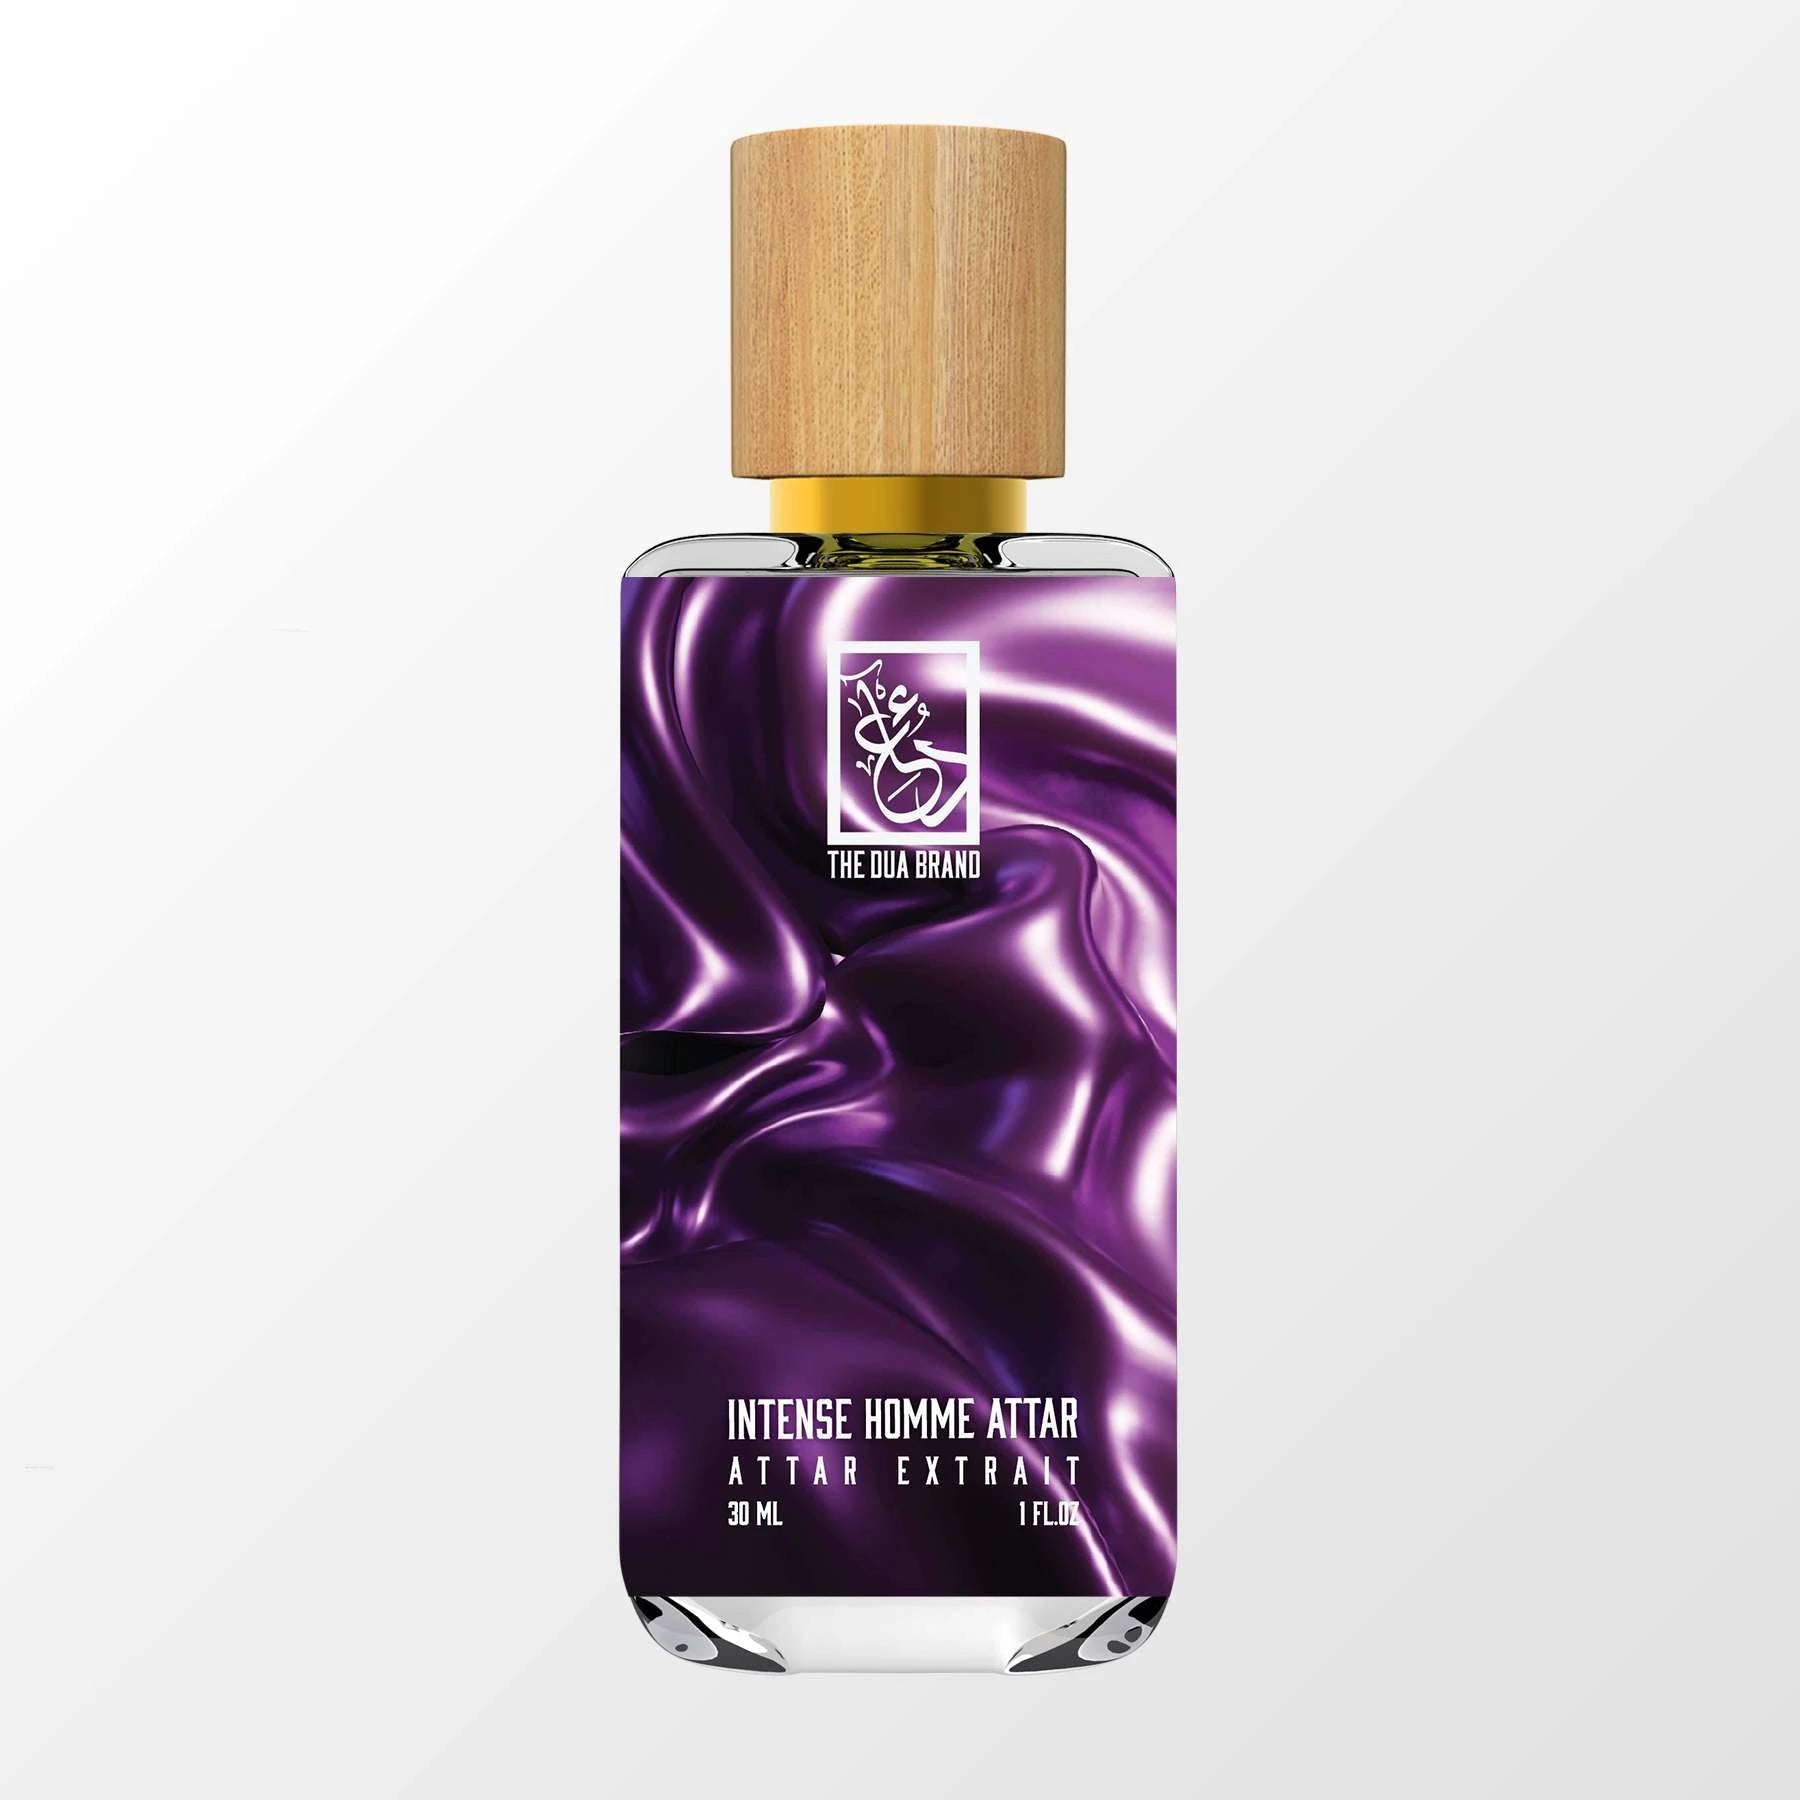 Intense Homme Attar - DUA FRAGRANCES - Inspired by Homme Parfum Dior - Masculine  Perfume - 34ml/1.1 FL OZ - Extrait De Parfum